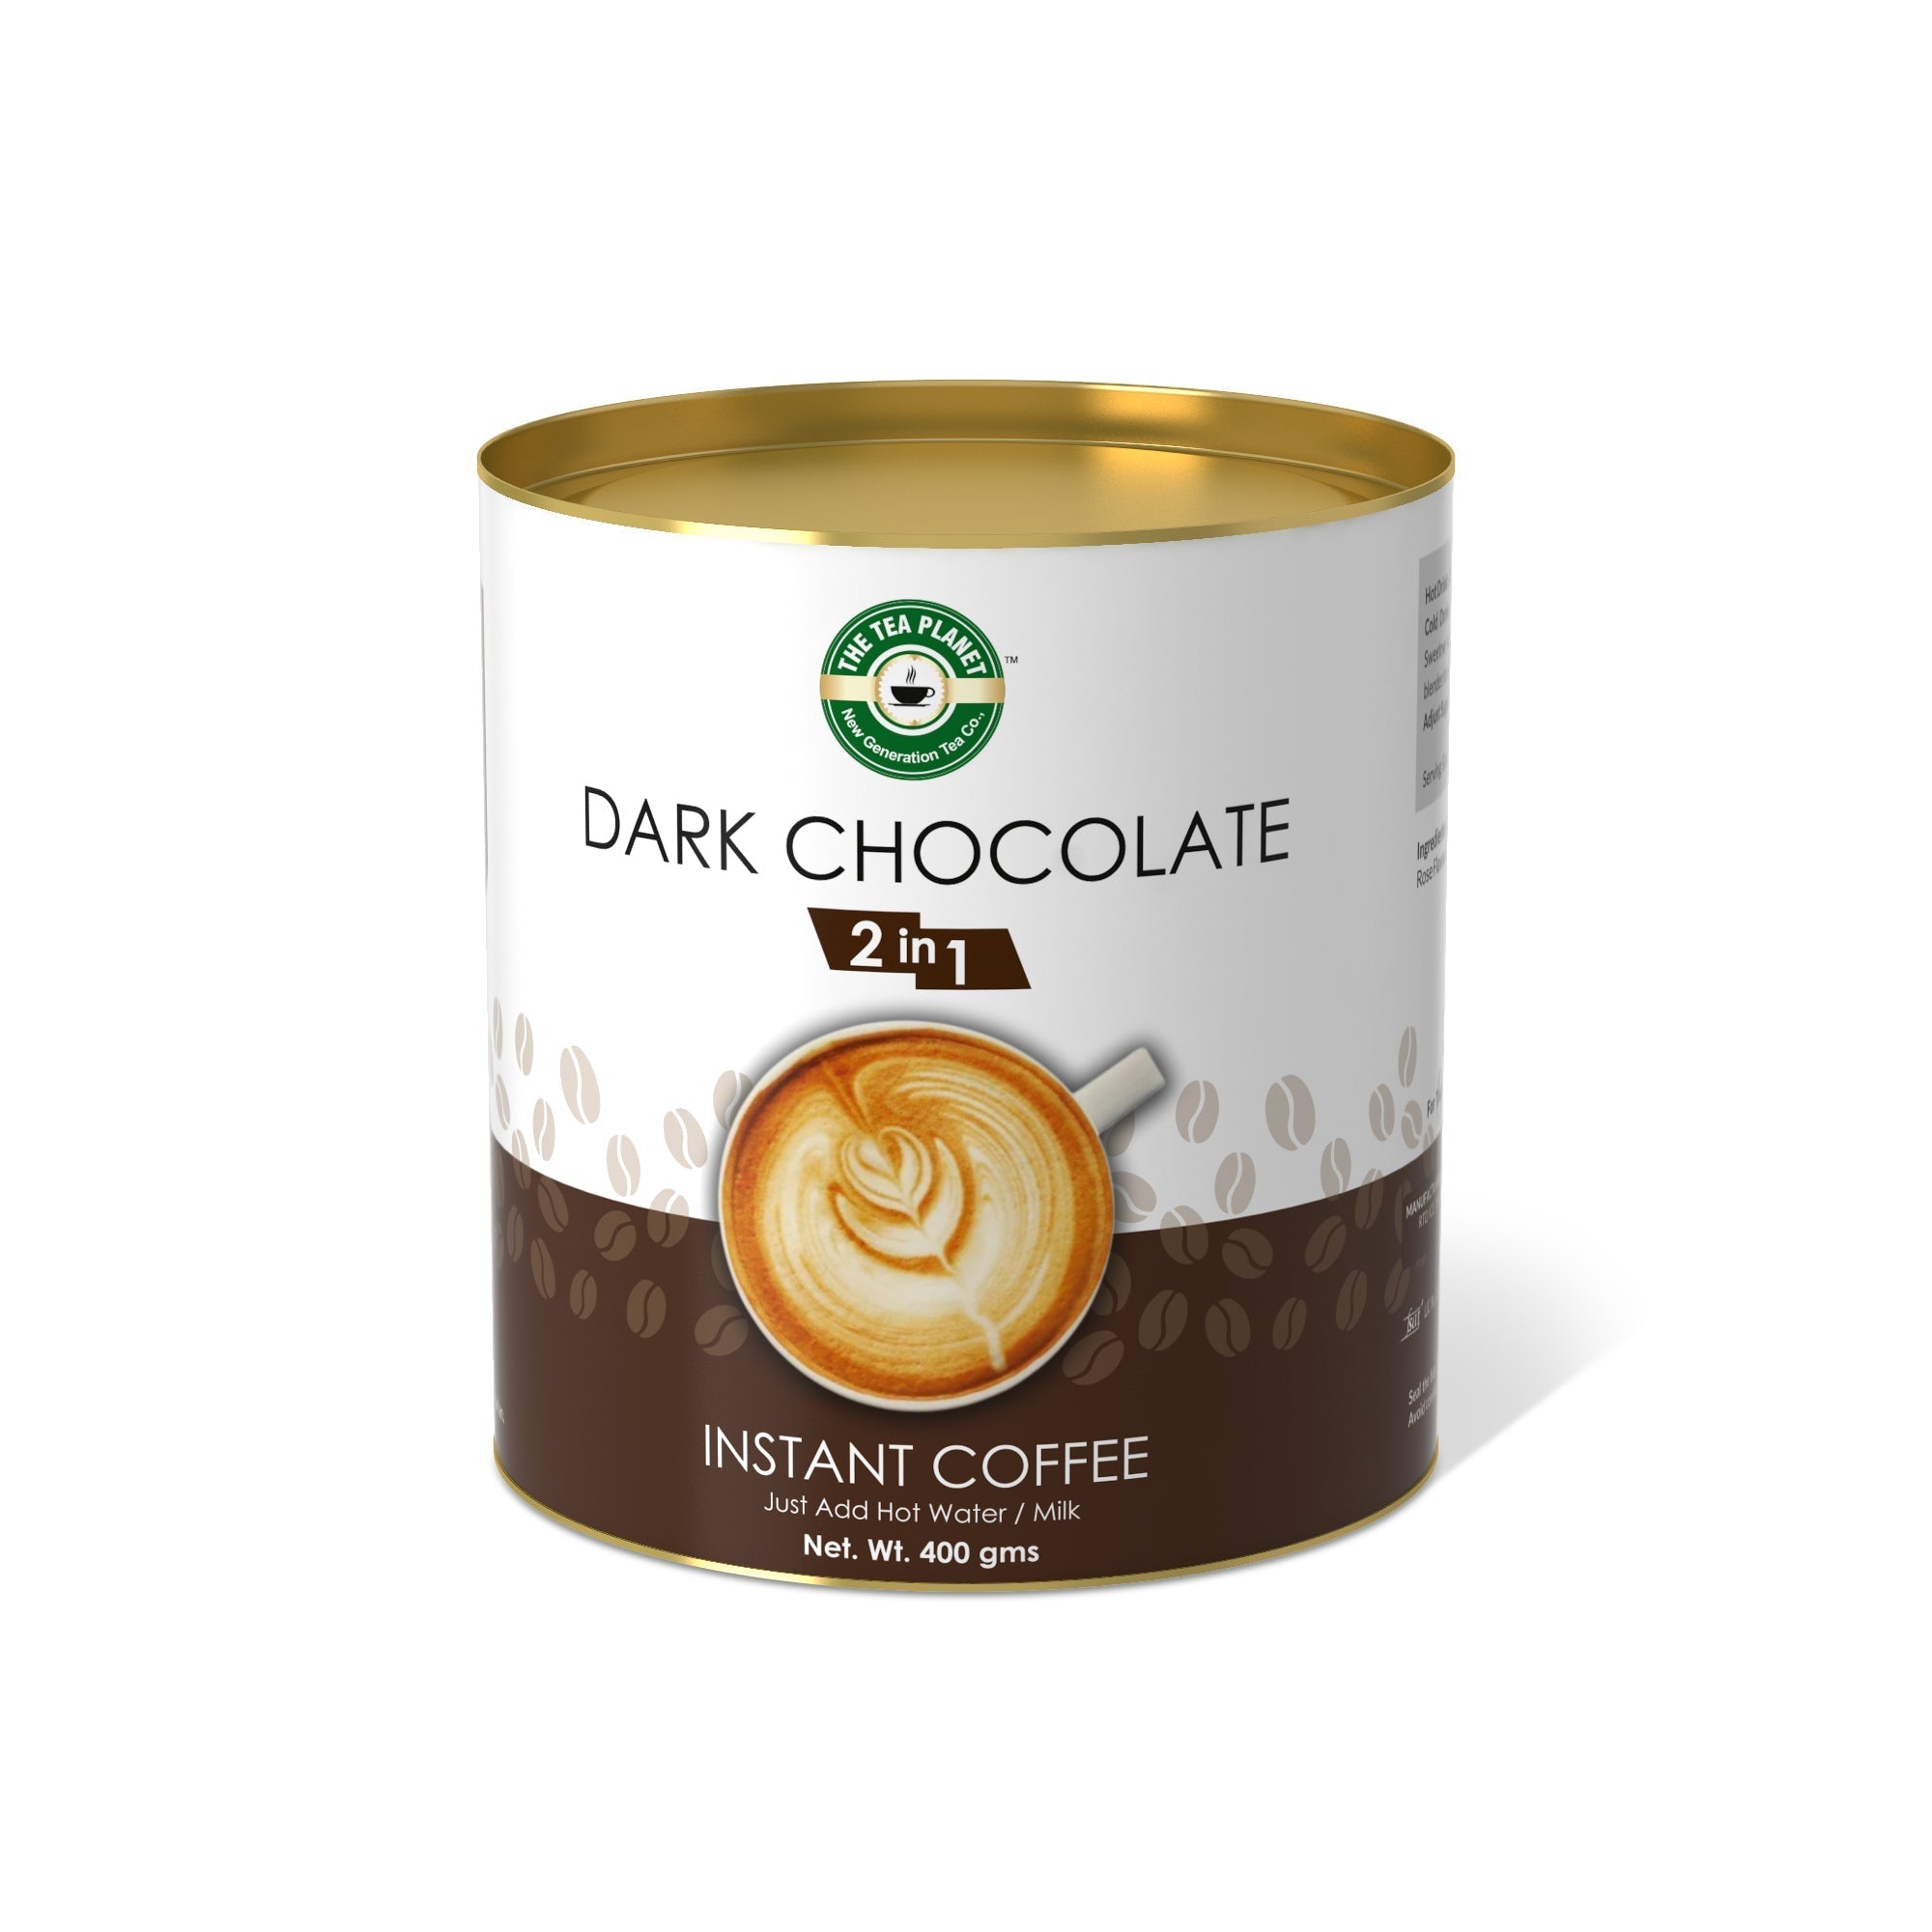 Dark Chocolate Instant Coffee Premix (2 in 1) - 800 gms